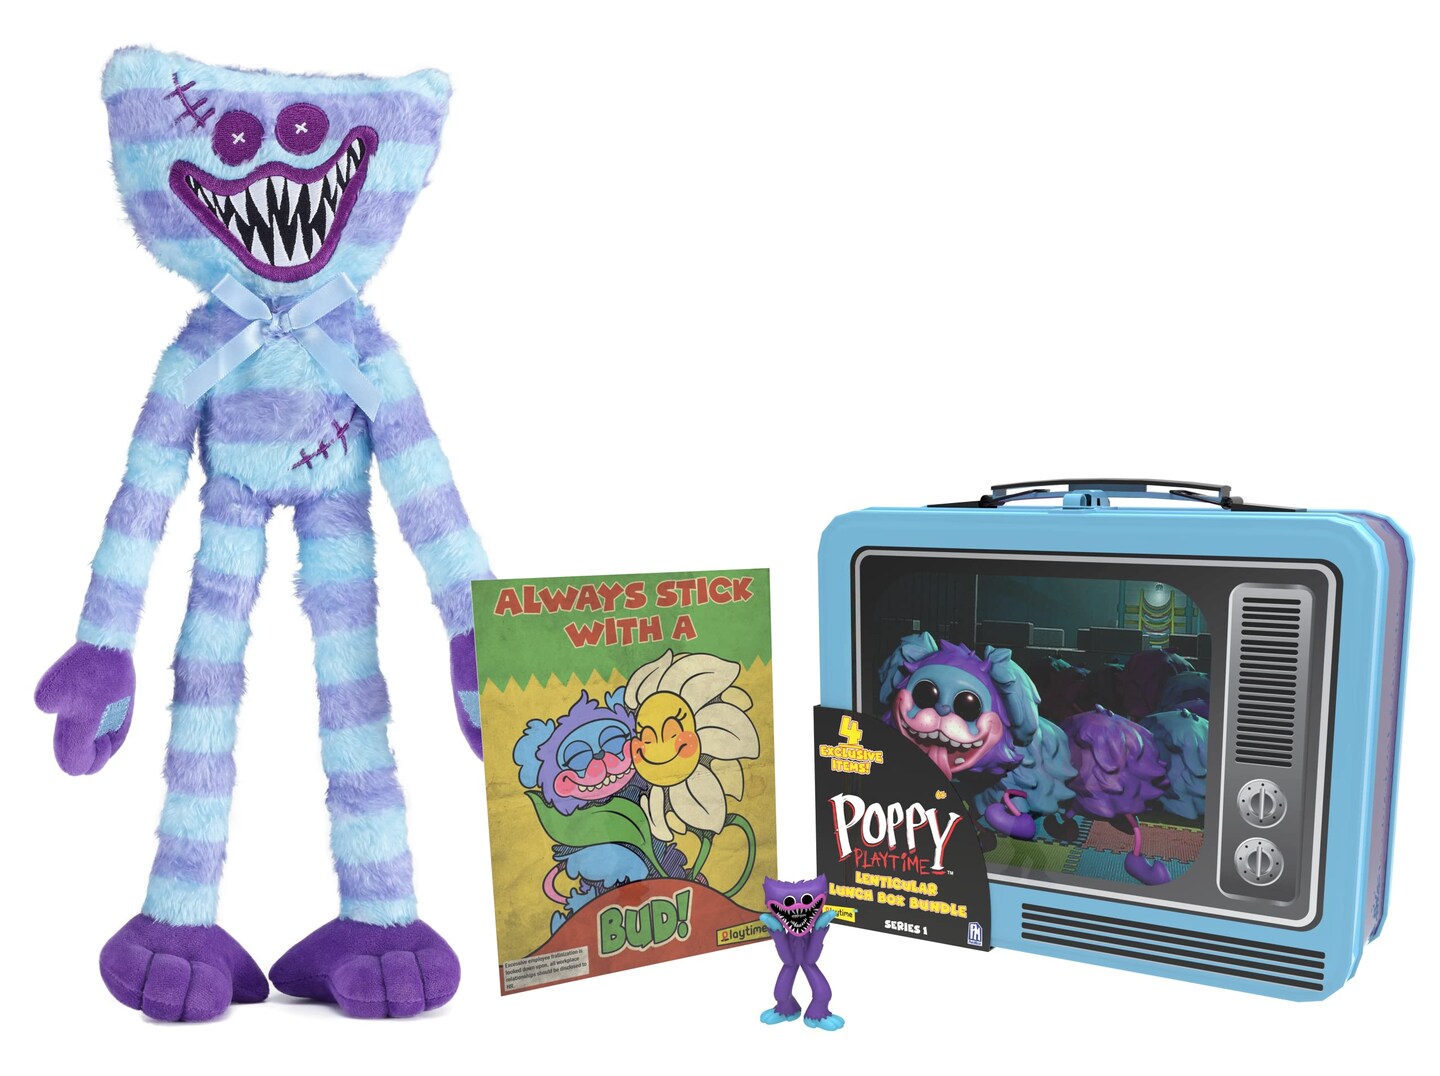 Poppy Playtime Plush Toy Poppy Doll Scare Box Gift for Friends